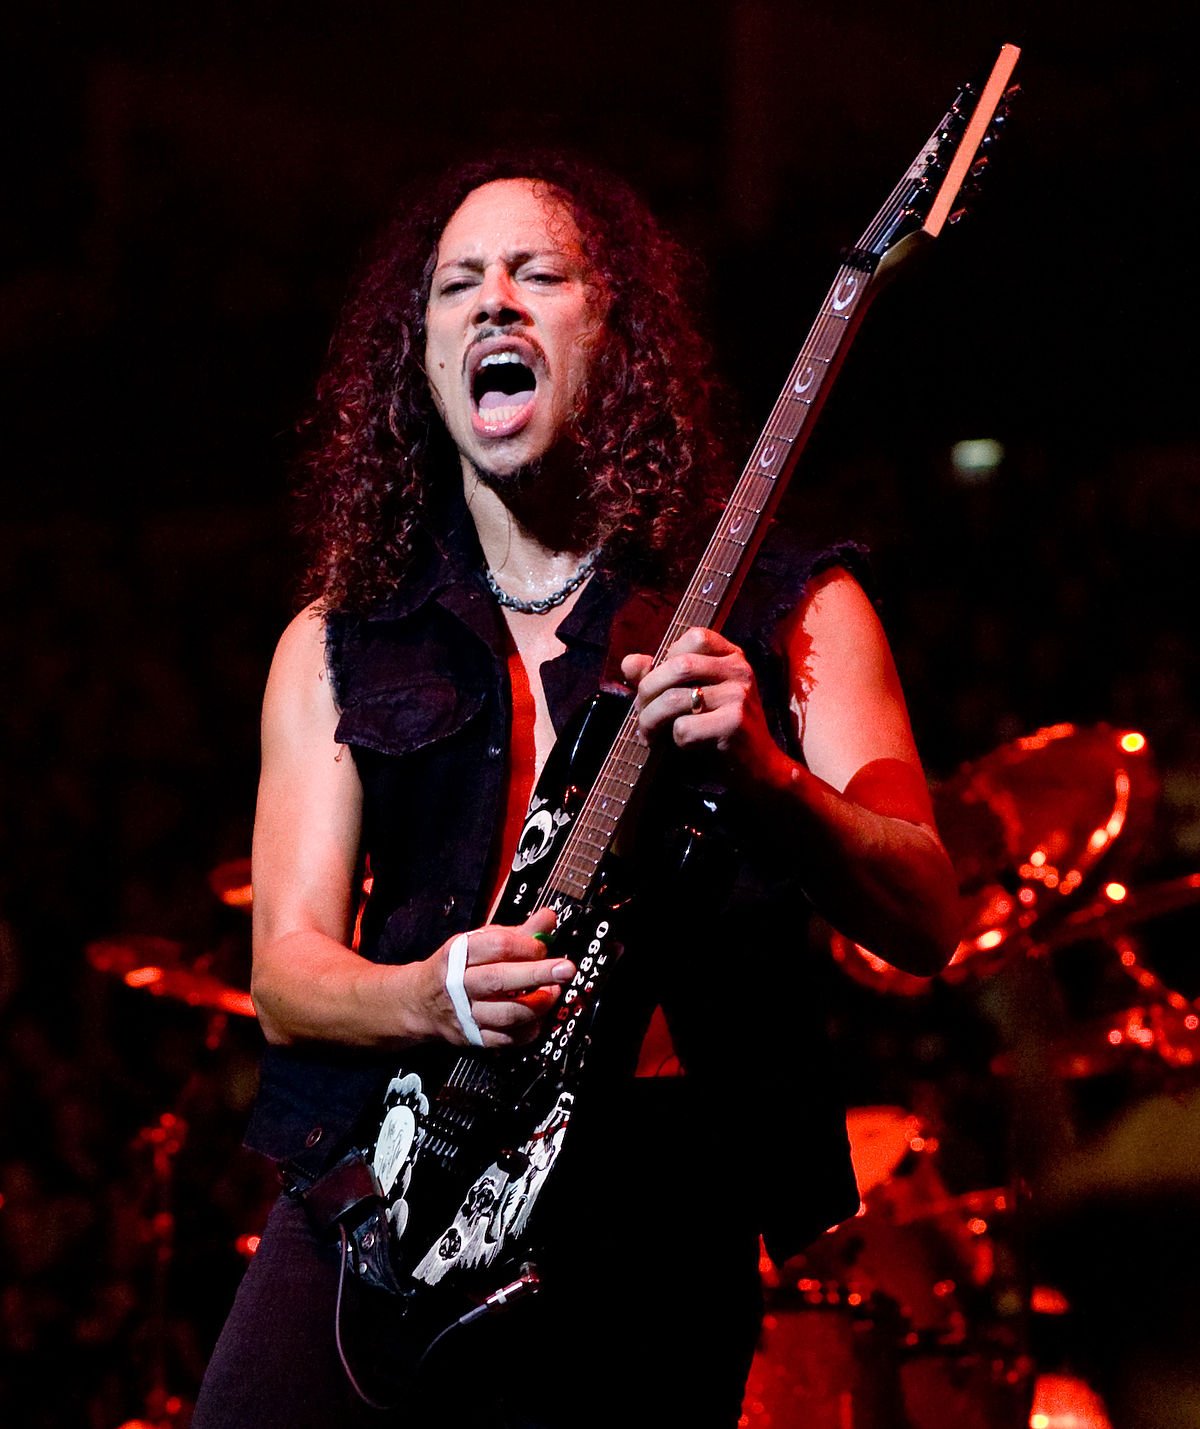 Herman Rarebell, Scorpions
Rudy Sarzo, Quiet Riot
Kirk Hammett, Metallica
HAPPY BIRTHDAY 